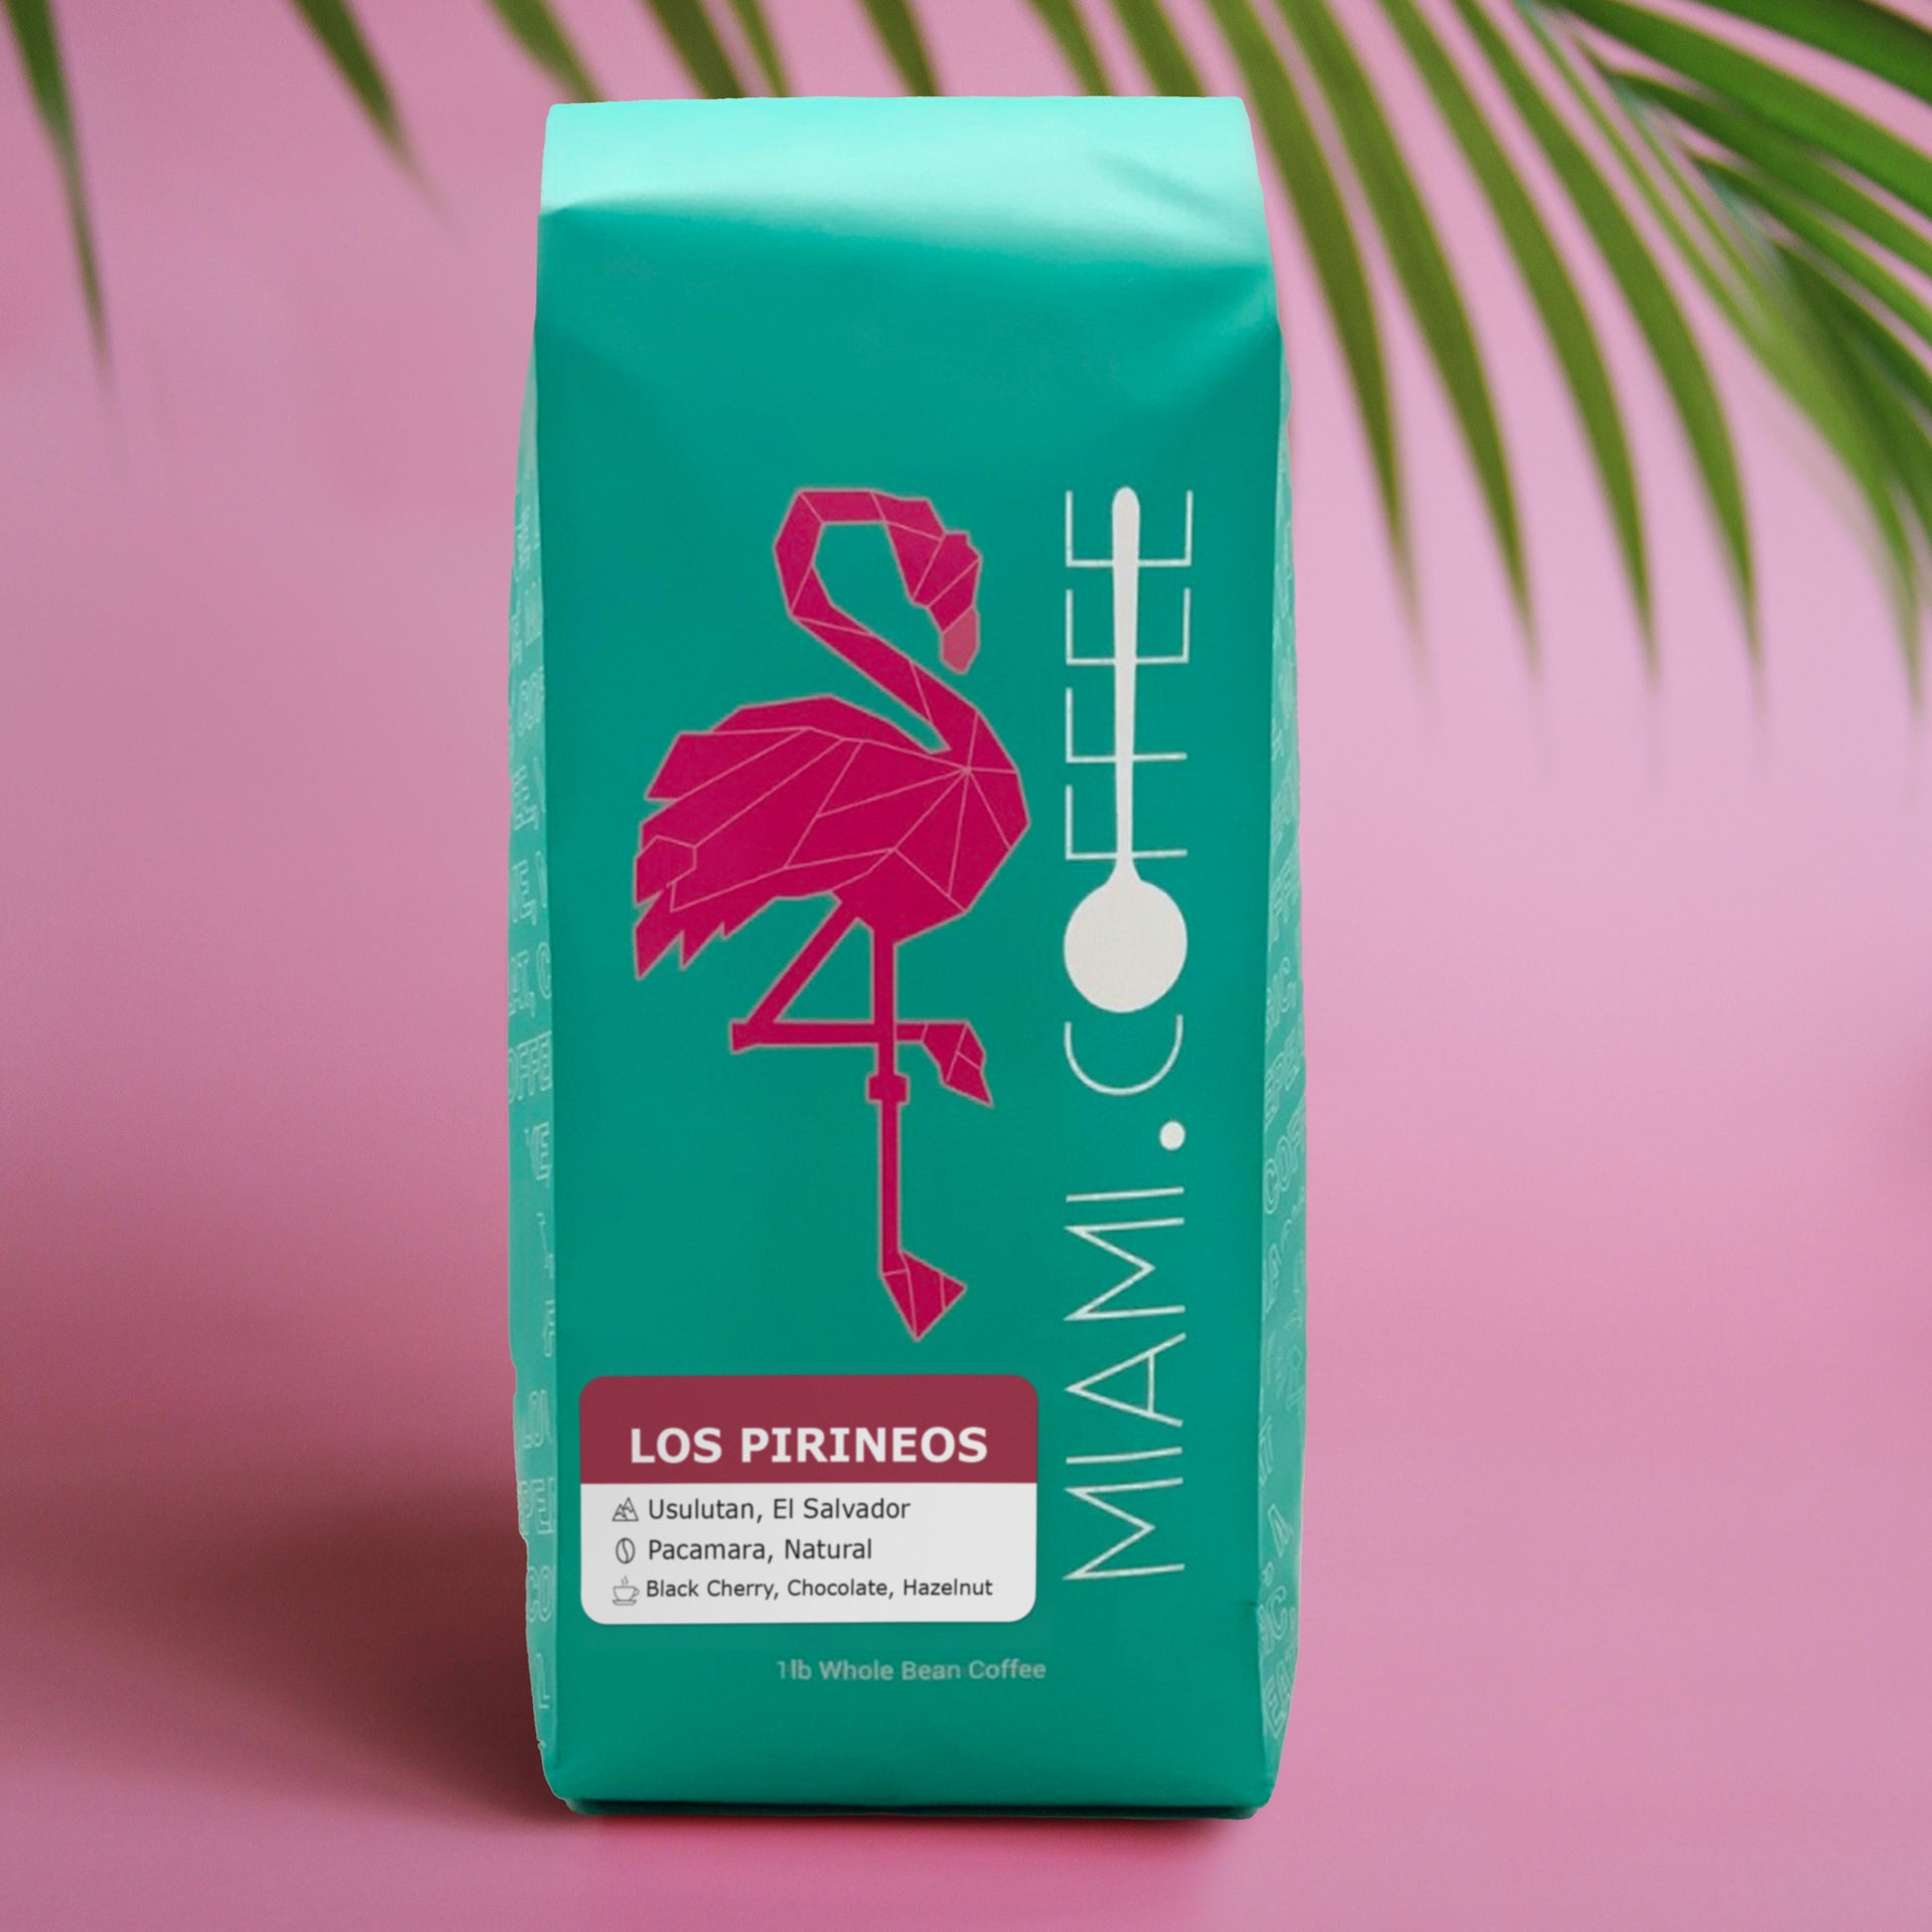 1 pound bag of Miami.Coffee El Salvador Finca Los Pirineos, Producer Diego Baraona, Pacamara, natural process, tasting notes: Black Cherry, Dark Chocolate, Roasted Hazelnut